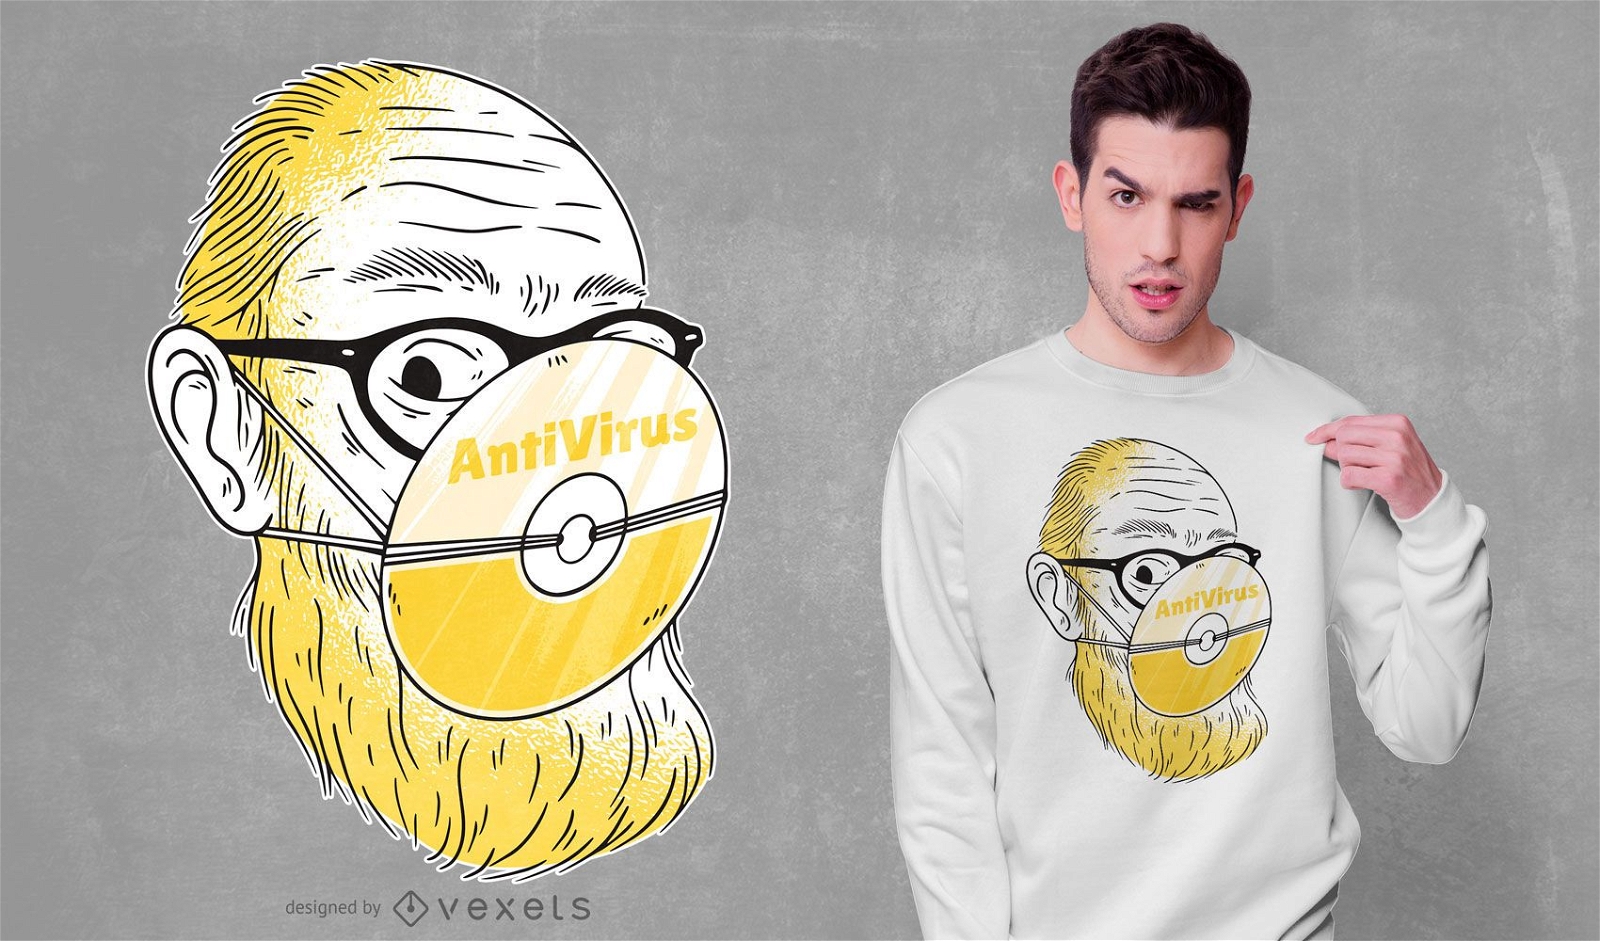 Antivirus t-shirt design